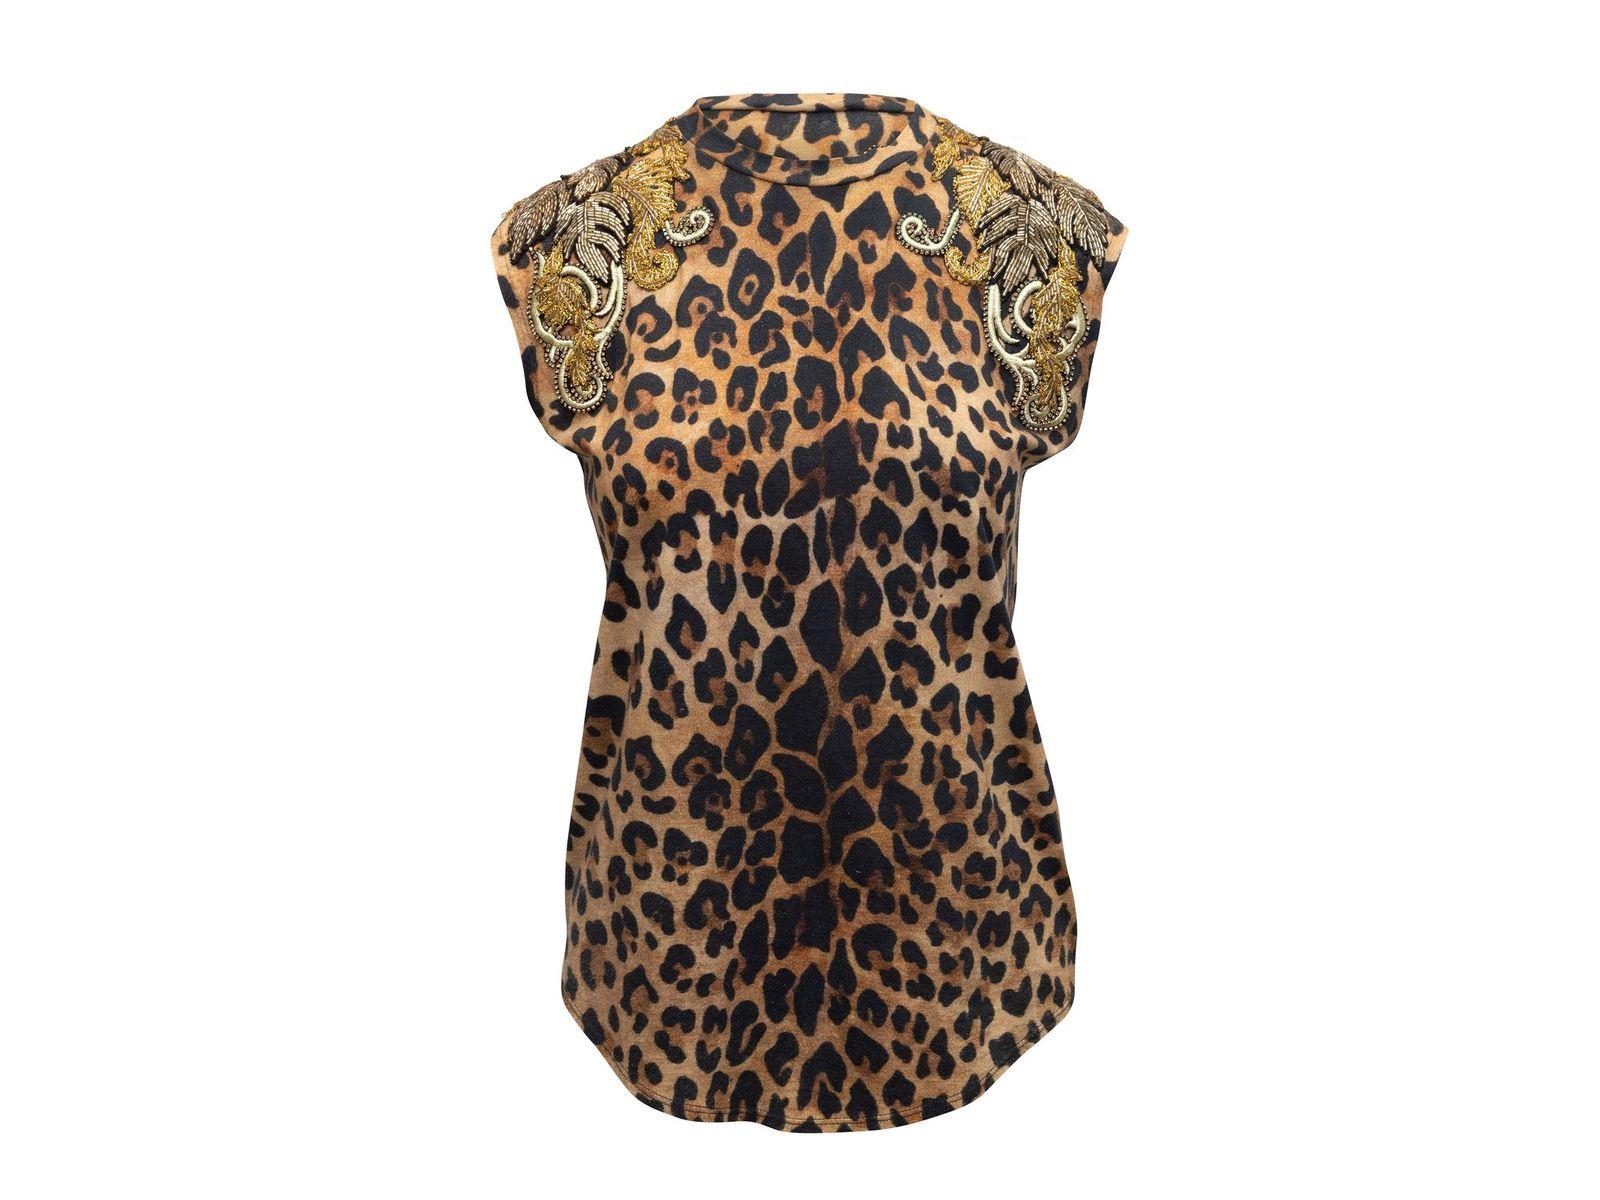 Women's Balmain Tan & Black Leather & Bead-Embellished Leopard Print Top